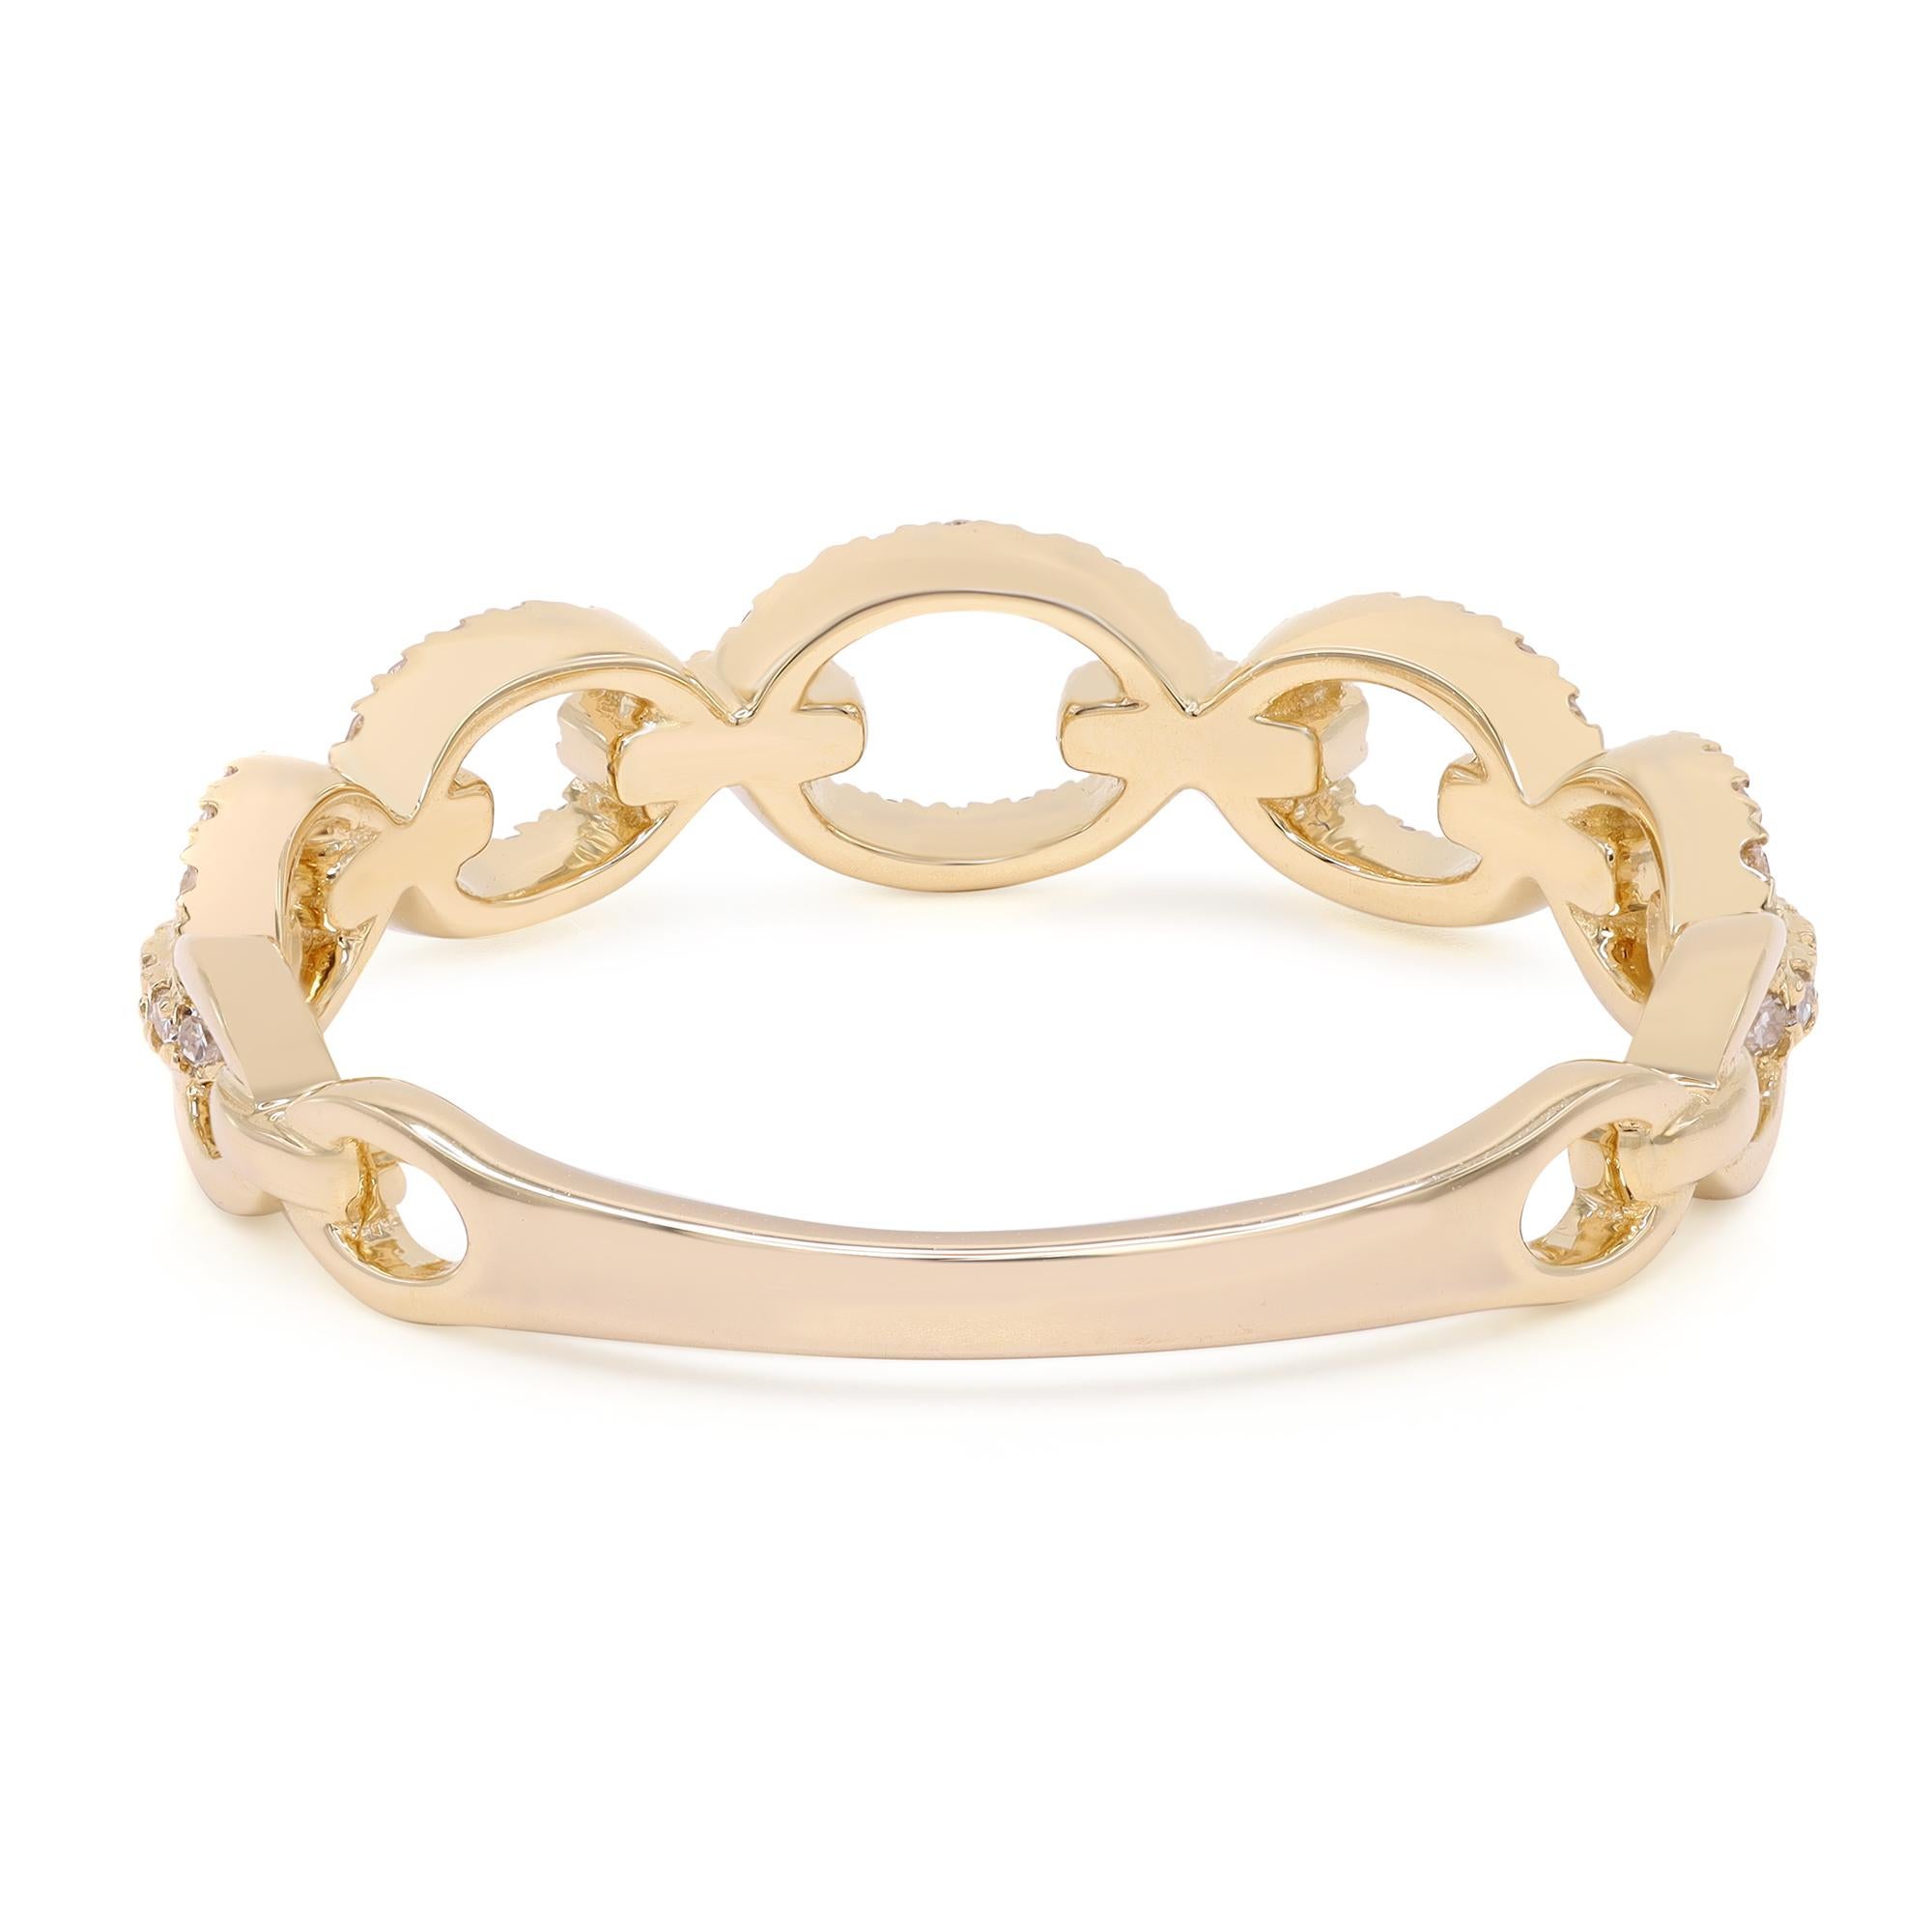 Modern Rachel Koen Pave Chain Link Diamond Ring 14K Yellow Gold 0.23Cttw For Sale